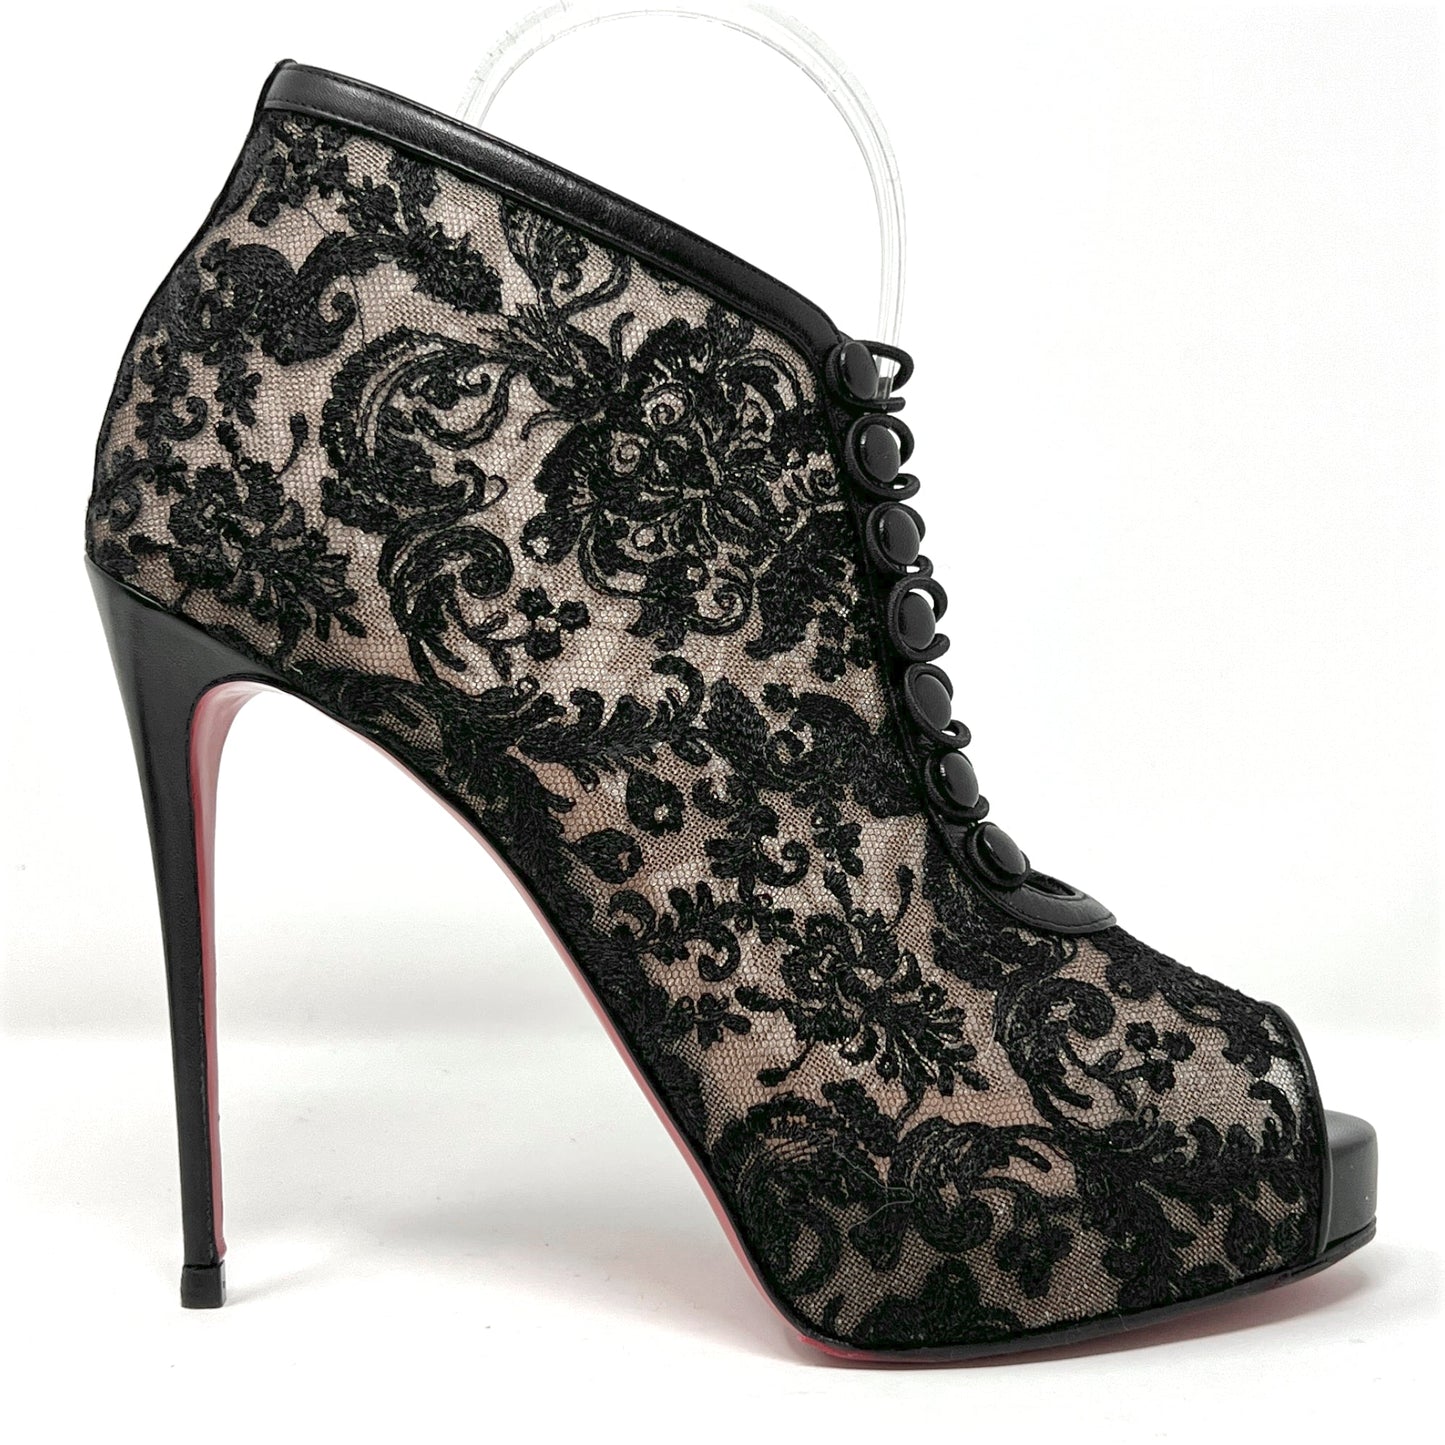 Christian Louboutin Top Top Black Lace Leather Trim Peep Toe Ankle Boots Pumps Size EU 39.5